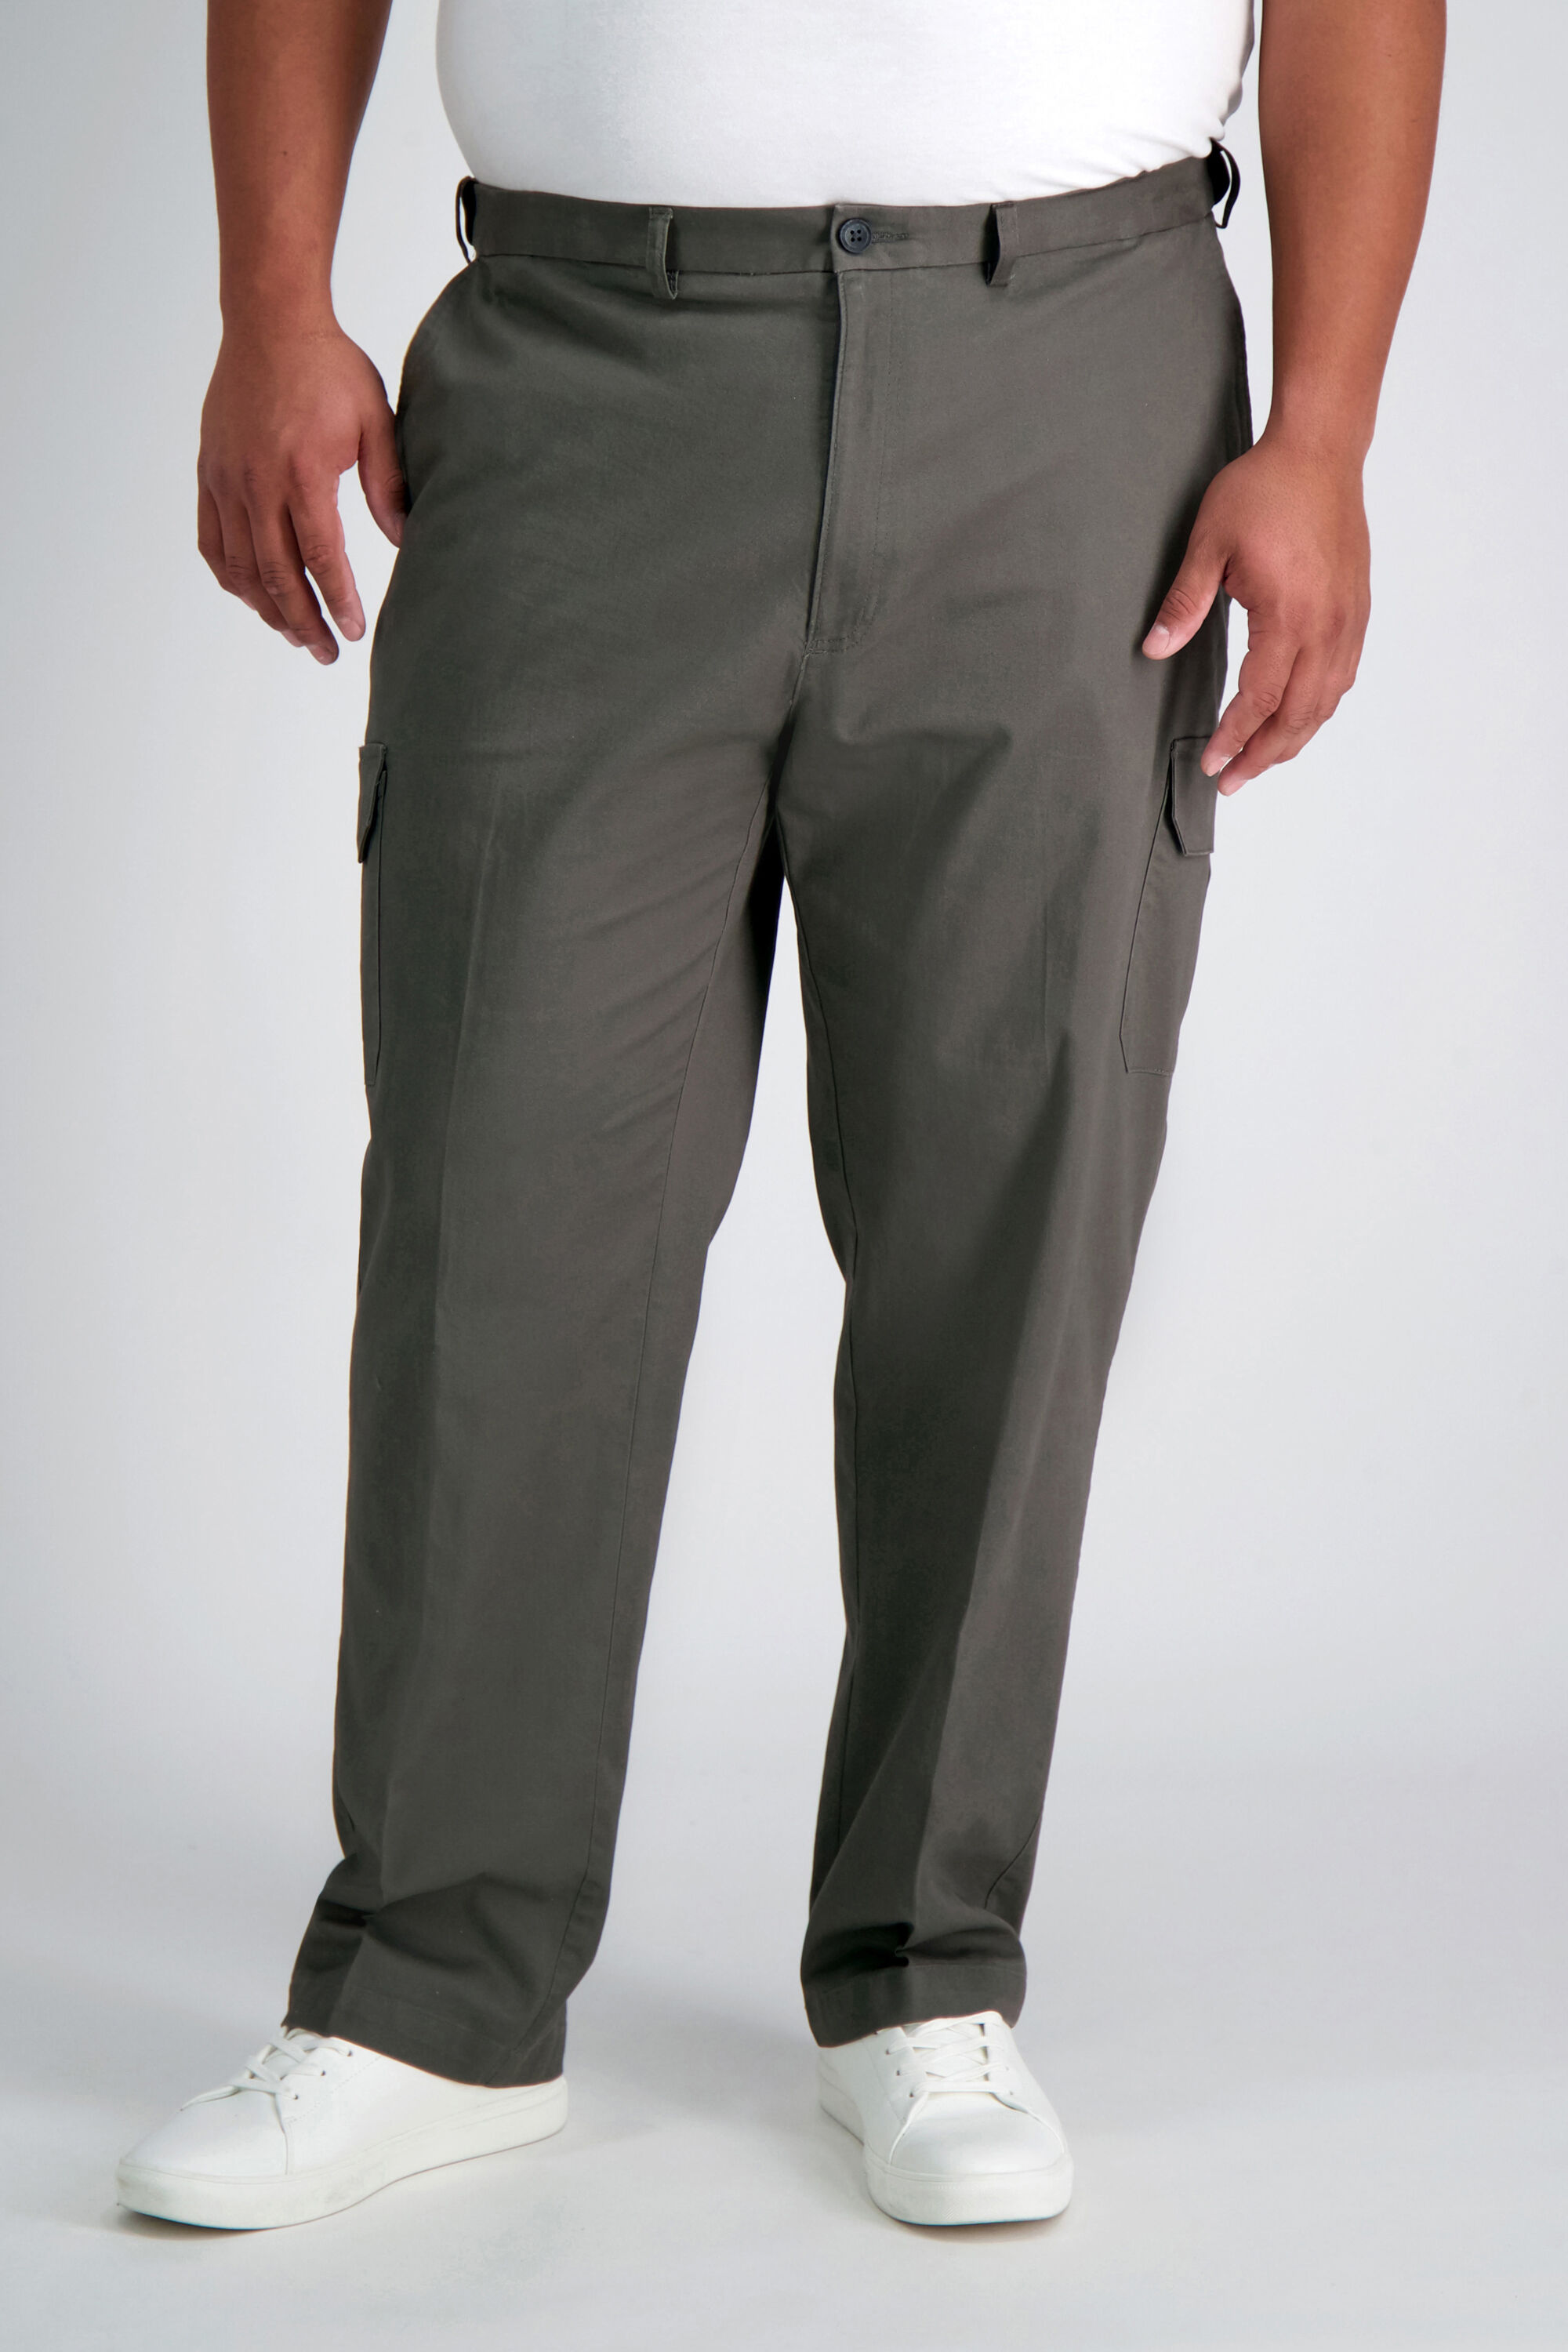 Big  Tall Essentials By Dxl Cargo Pants  Mens Big And Tall Khaki 46x32   Target